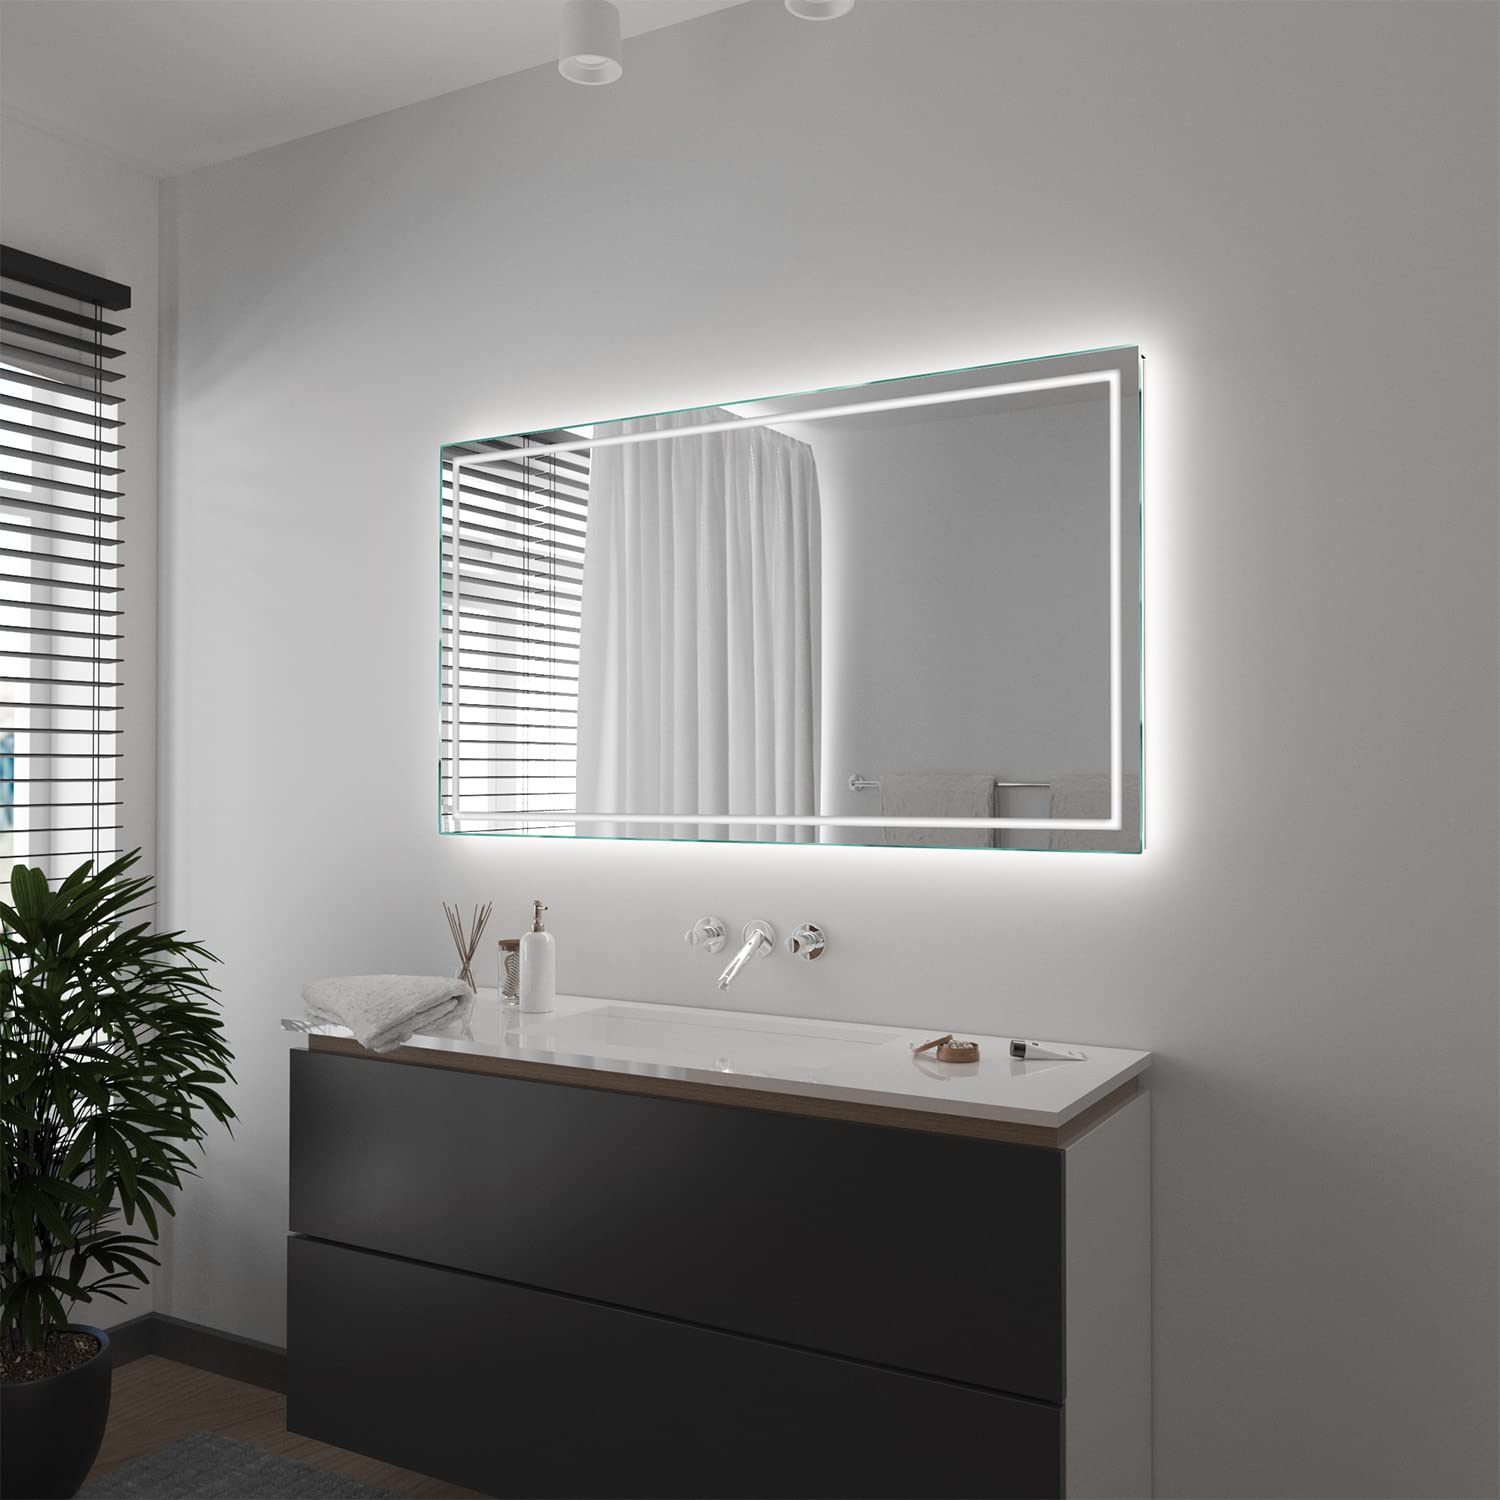 SARAR Wandspiegel mit rundum LED-Beleuchtung 80x90 cm Made in Germany Designo MA4114 Eckiger Badspiegel Spiegel mit Beleuchtung Badezimmerspiegel nach-auf Maß